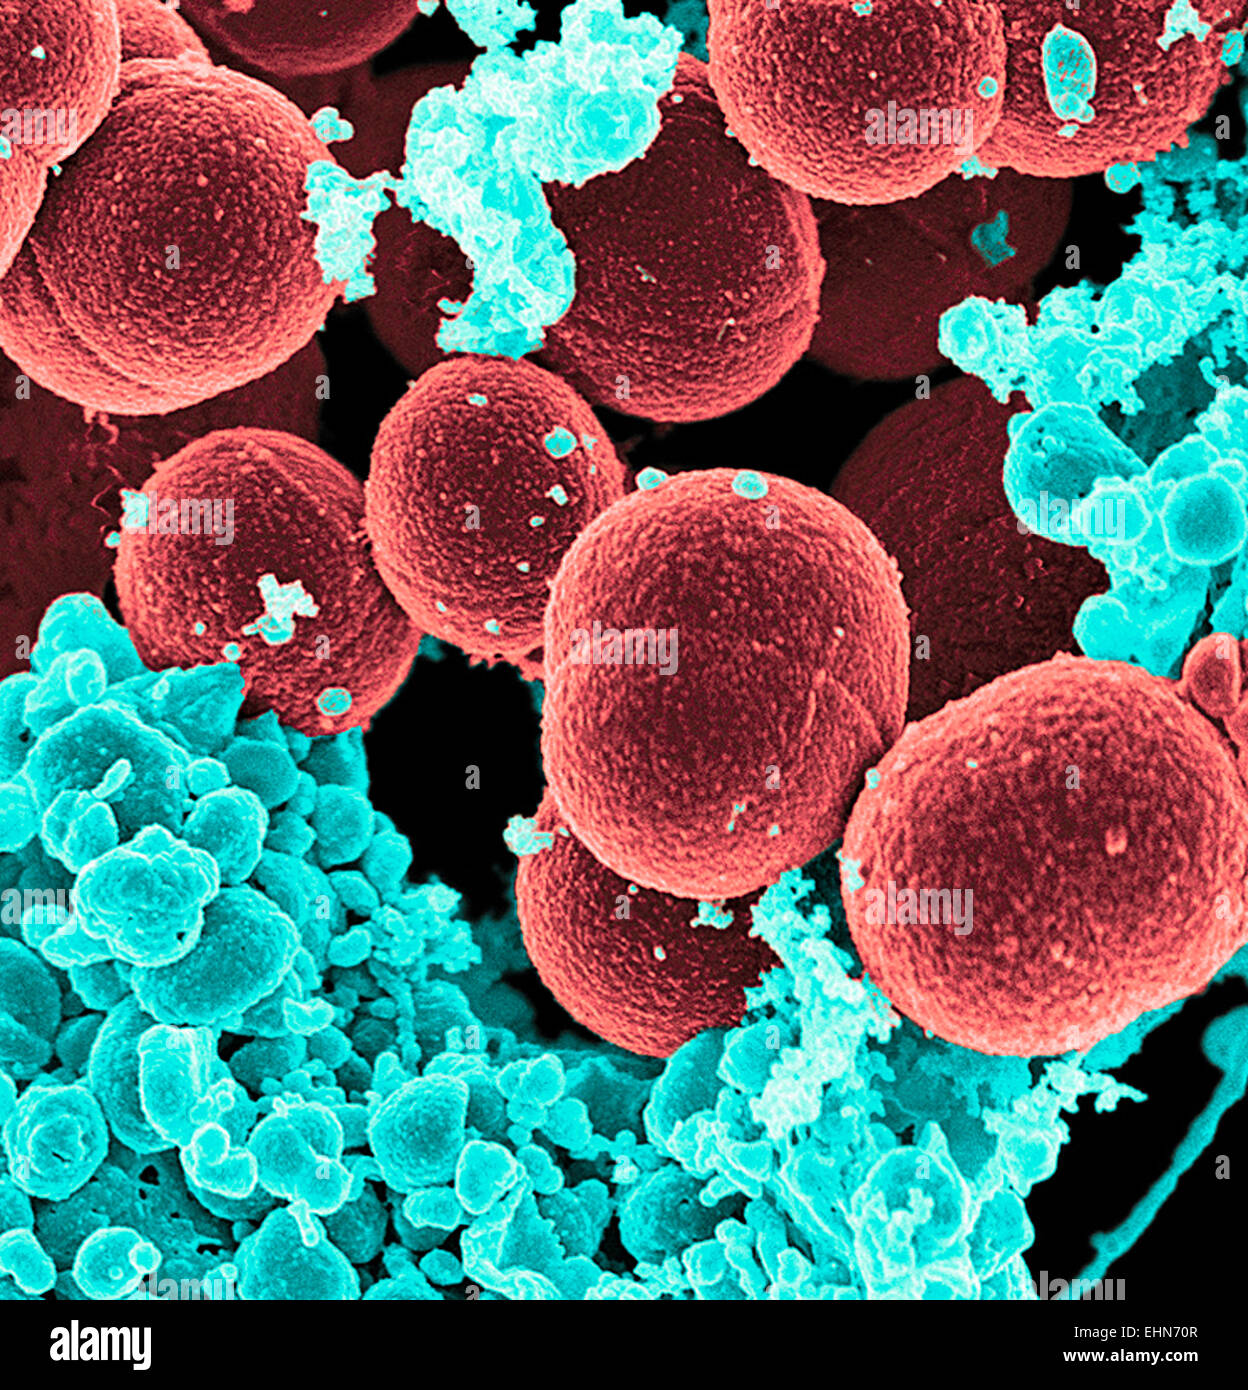 Coloured scanning electron micrograph (SEM) of methicillin-resistant Staphylococcus aureus (MRSA) bacteria. Stock Photo